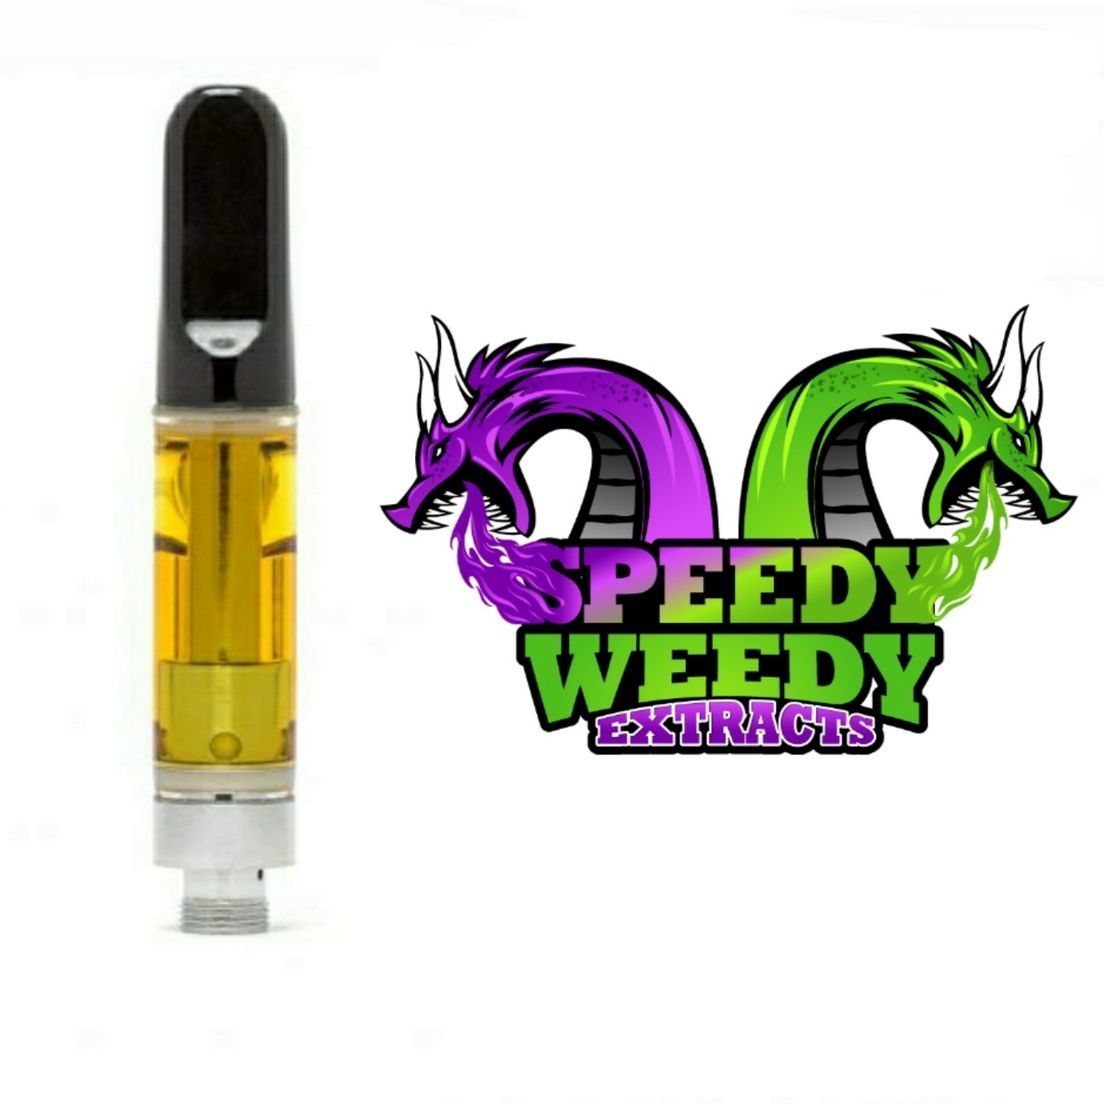 1. Speedy Weedy 1g Cartridge - Black Cherry Punch